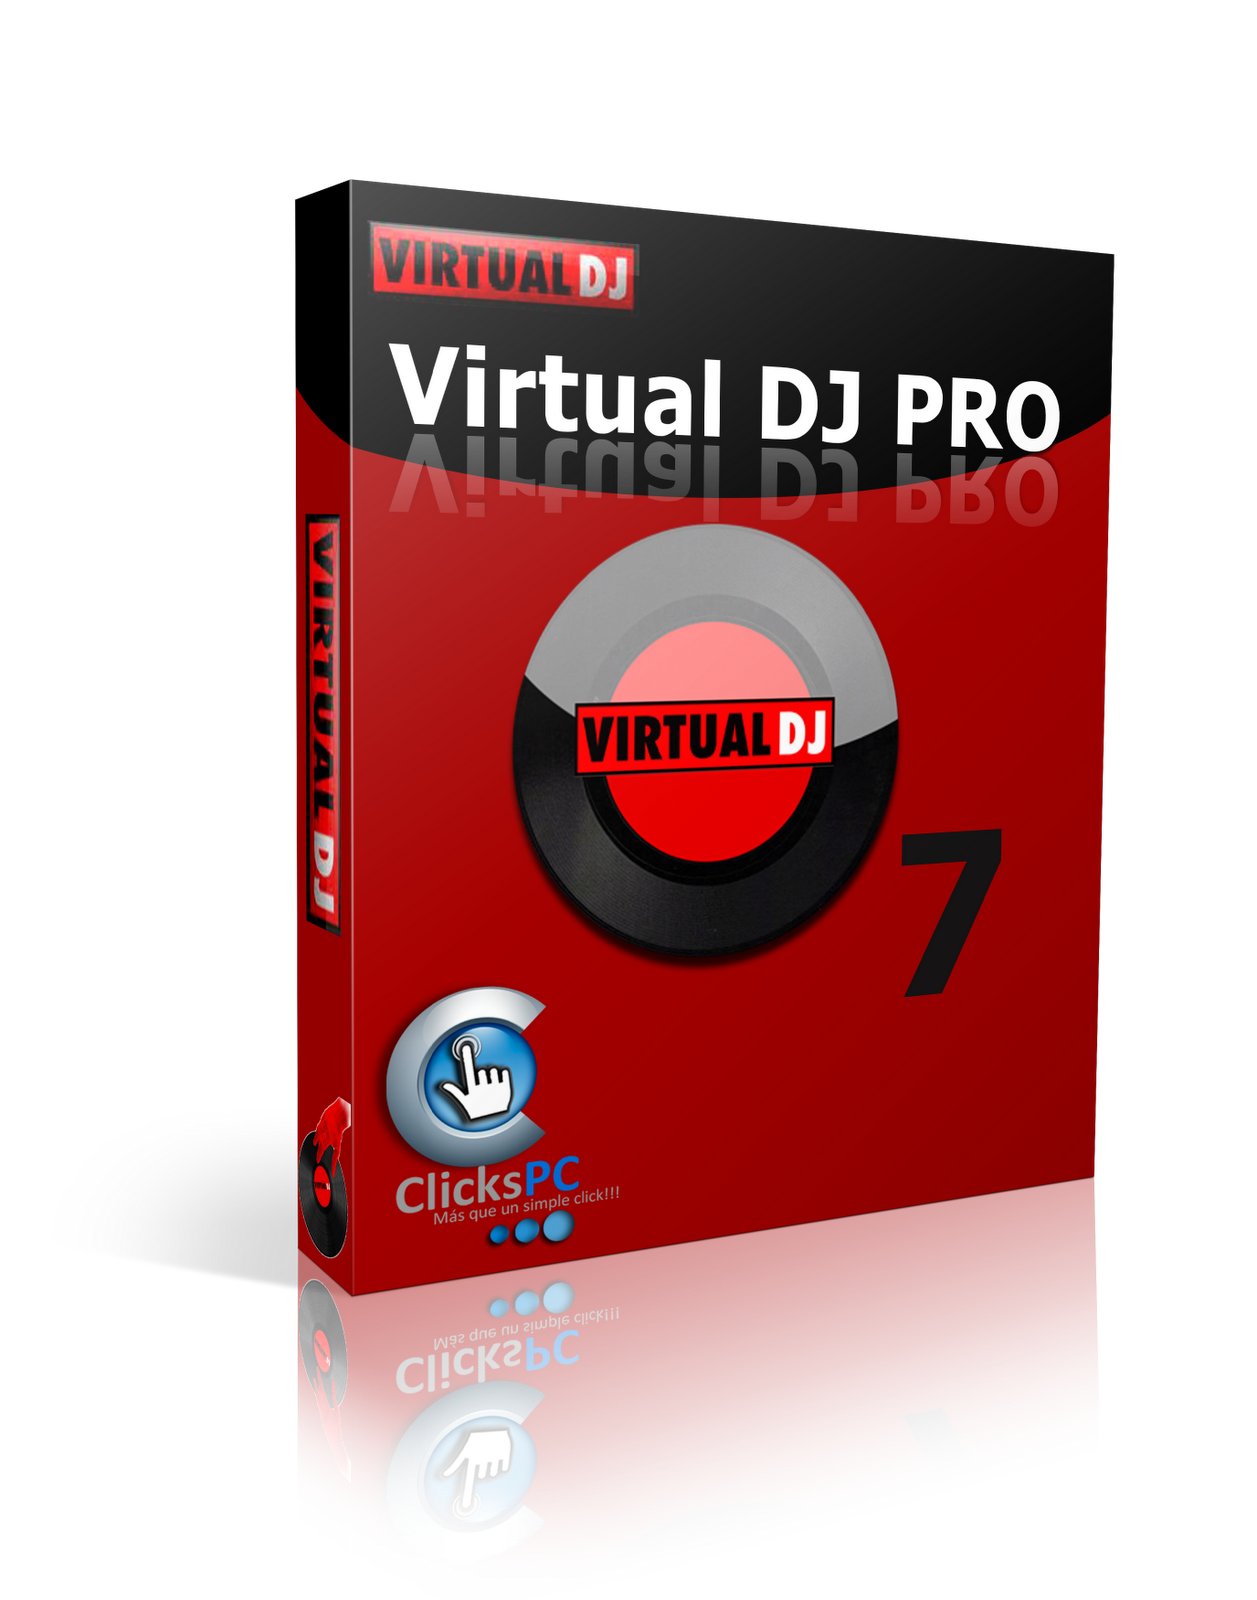 atomix virtual dj pro full v 7.0 4 crack rar